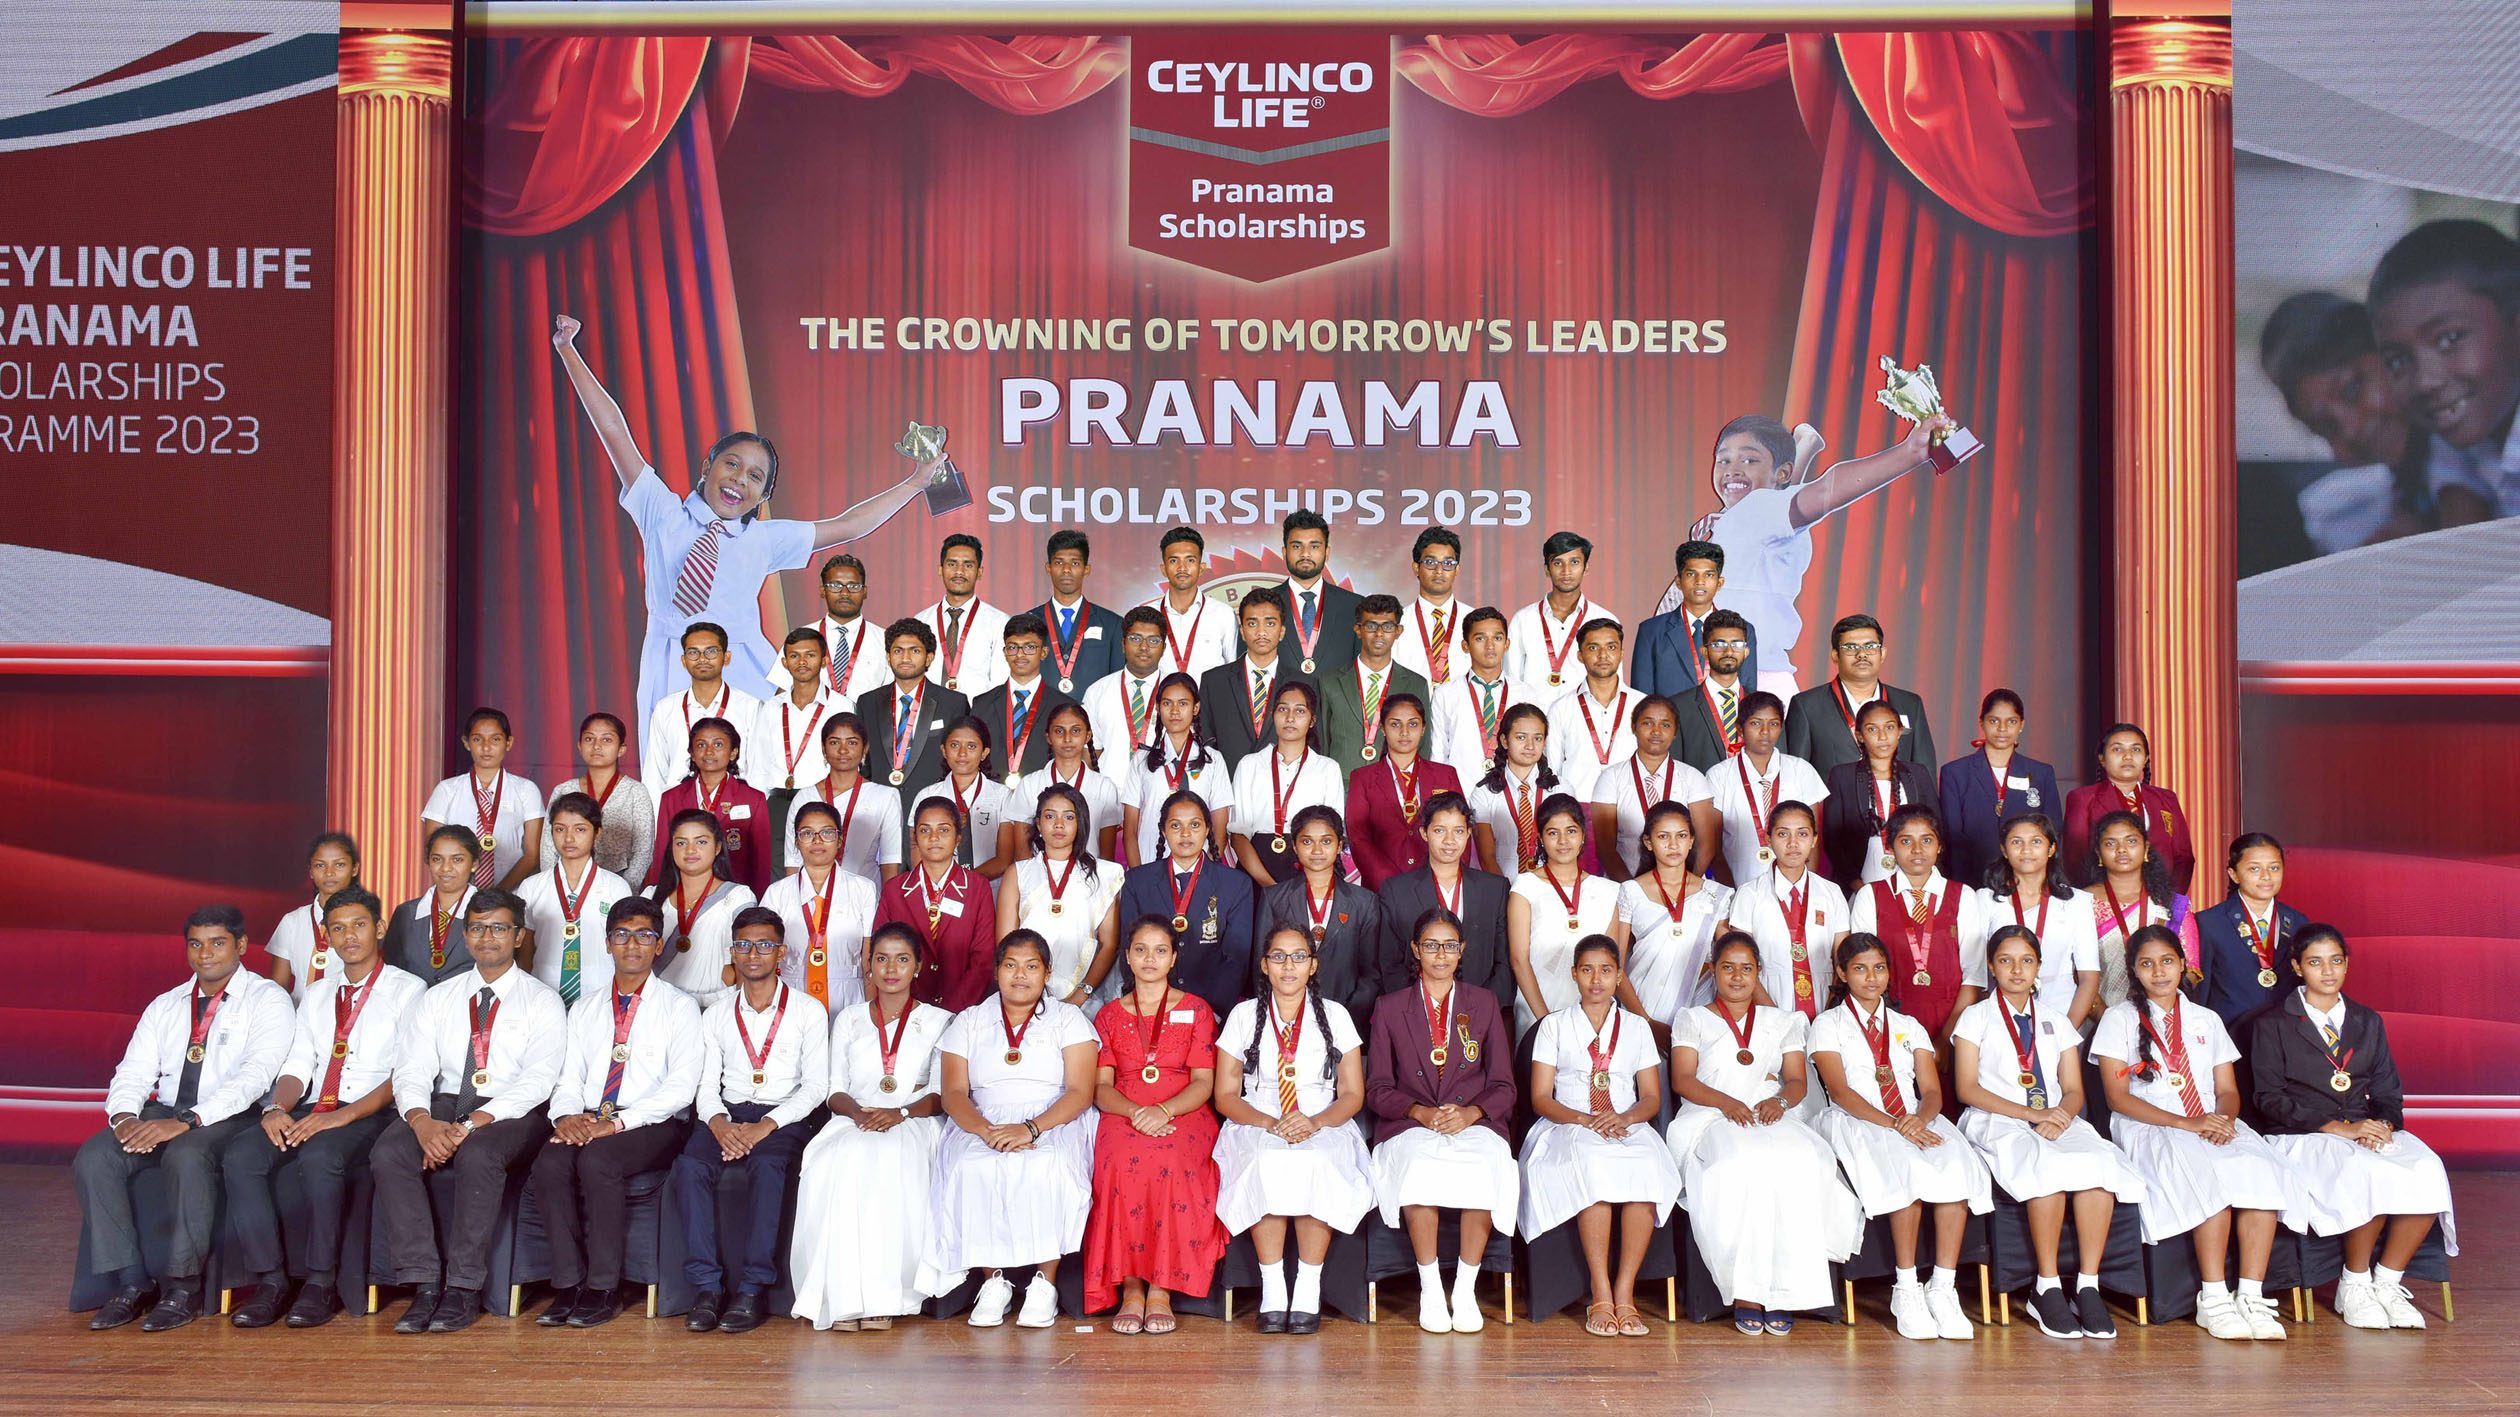 A group of Ceylinco Life ‘Pranama’ Scholarship winners